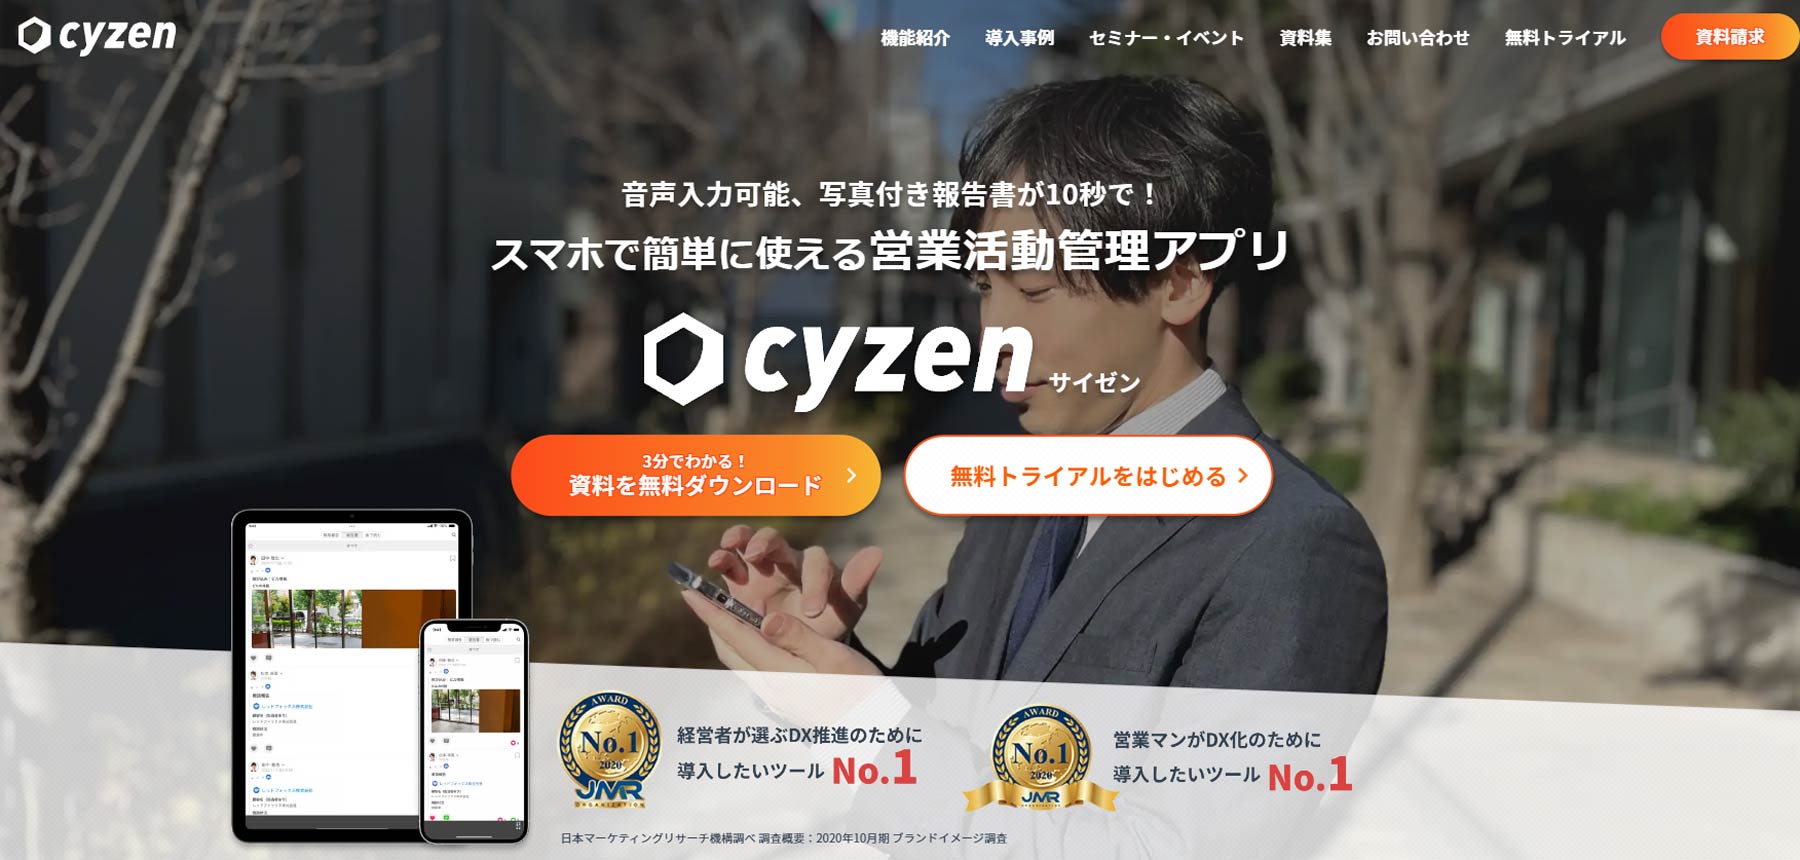 cyzen公式Webサイト